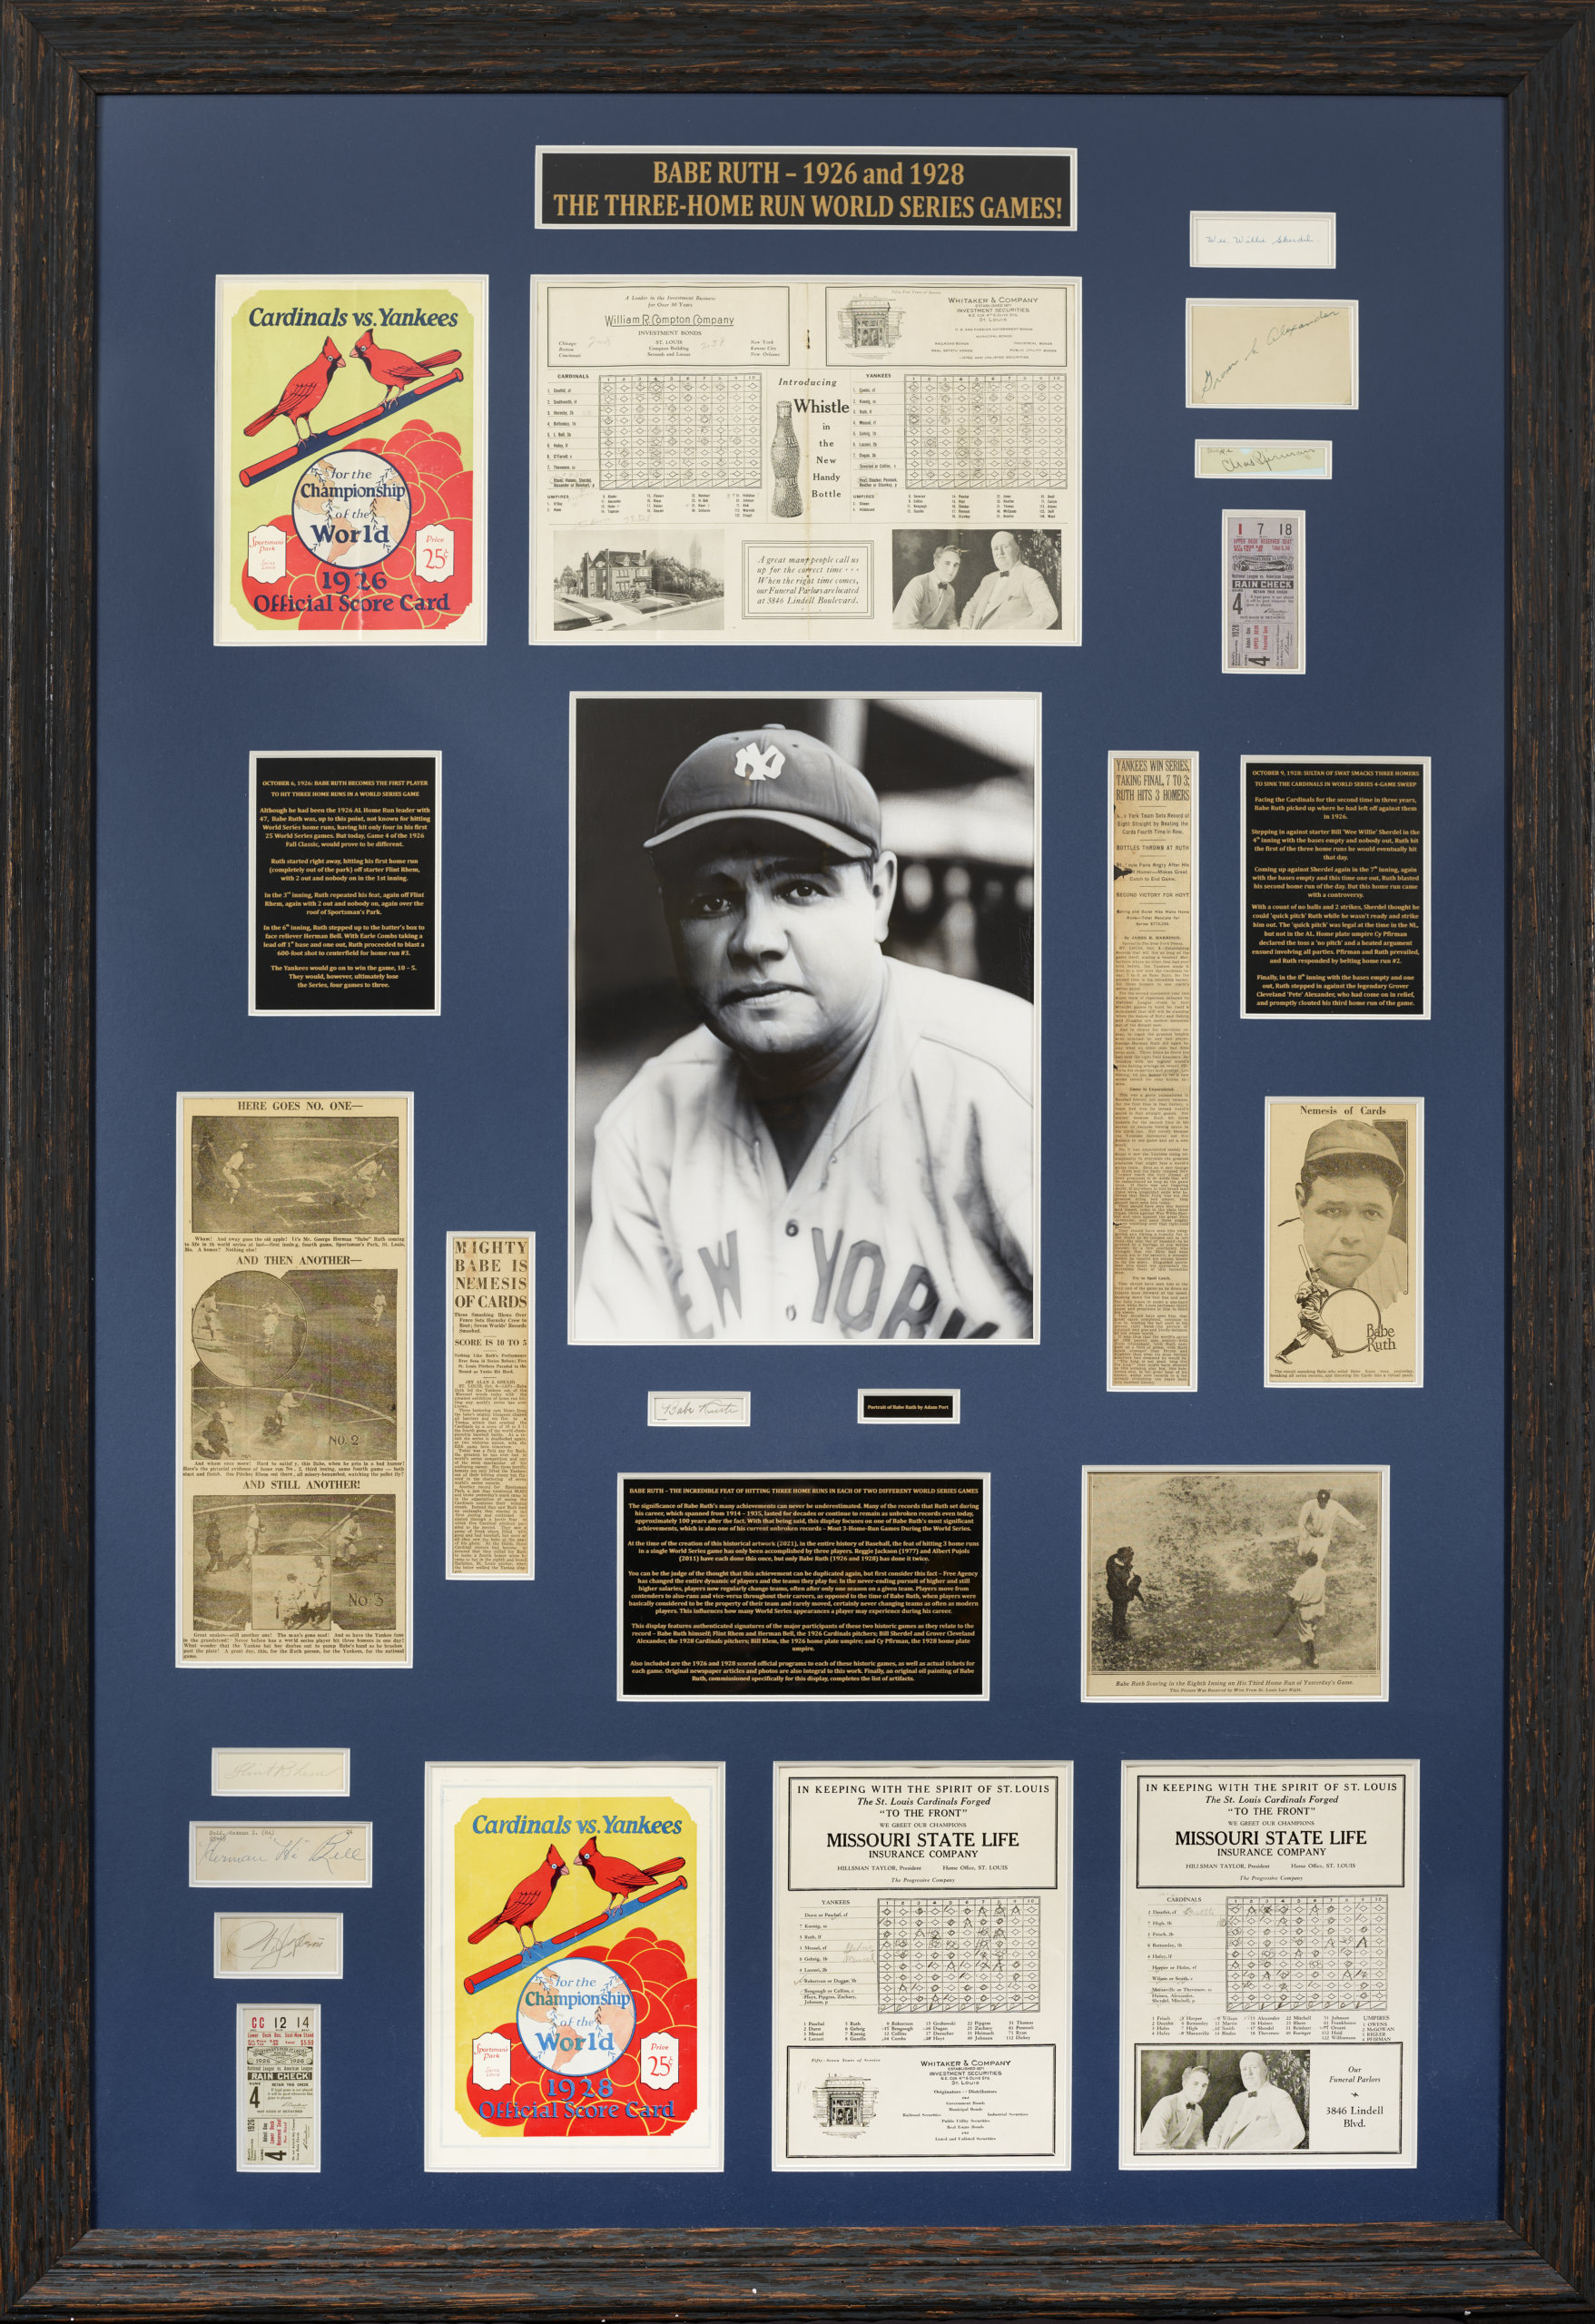 "Sports Conversation Art" piece honoring Babe Ruth's three World Series home runs